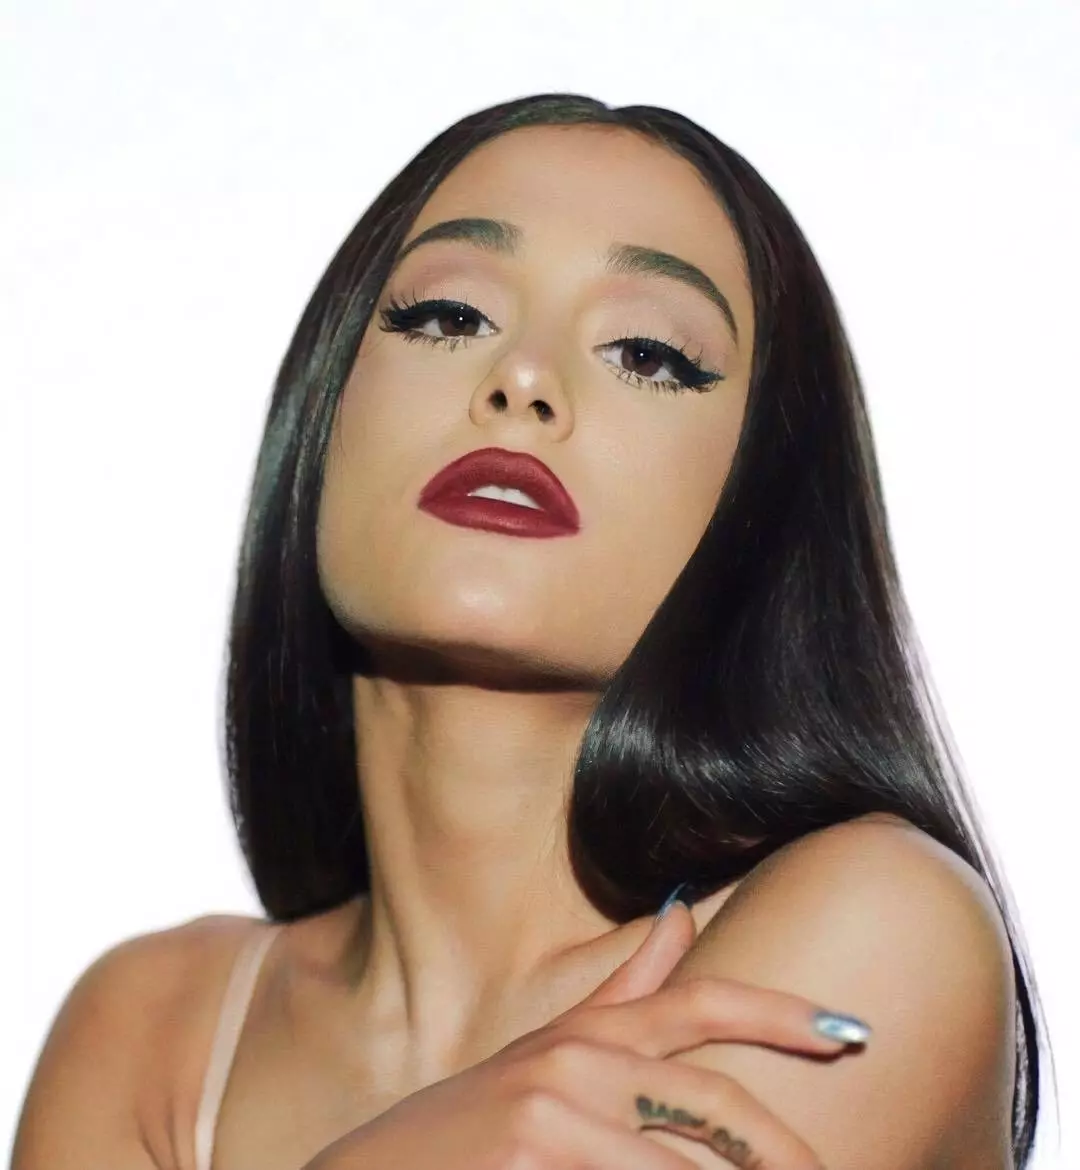 Makeup Ariana Grande: การแต่งหน้าแบบทีละขั้นตอนในรูปแบบของ Ariana Grande คำแนะนำที่เป็นประโยชน์ 4174_12